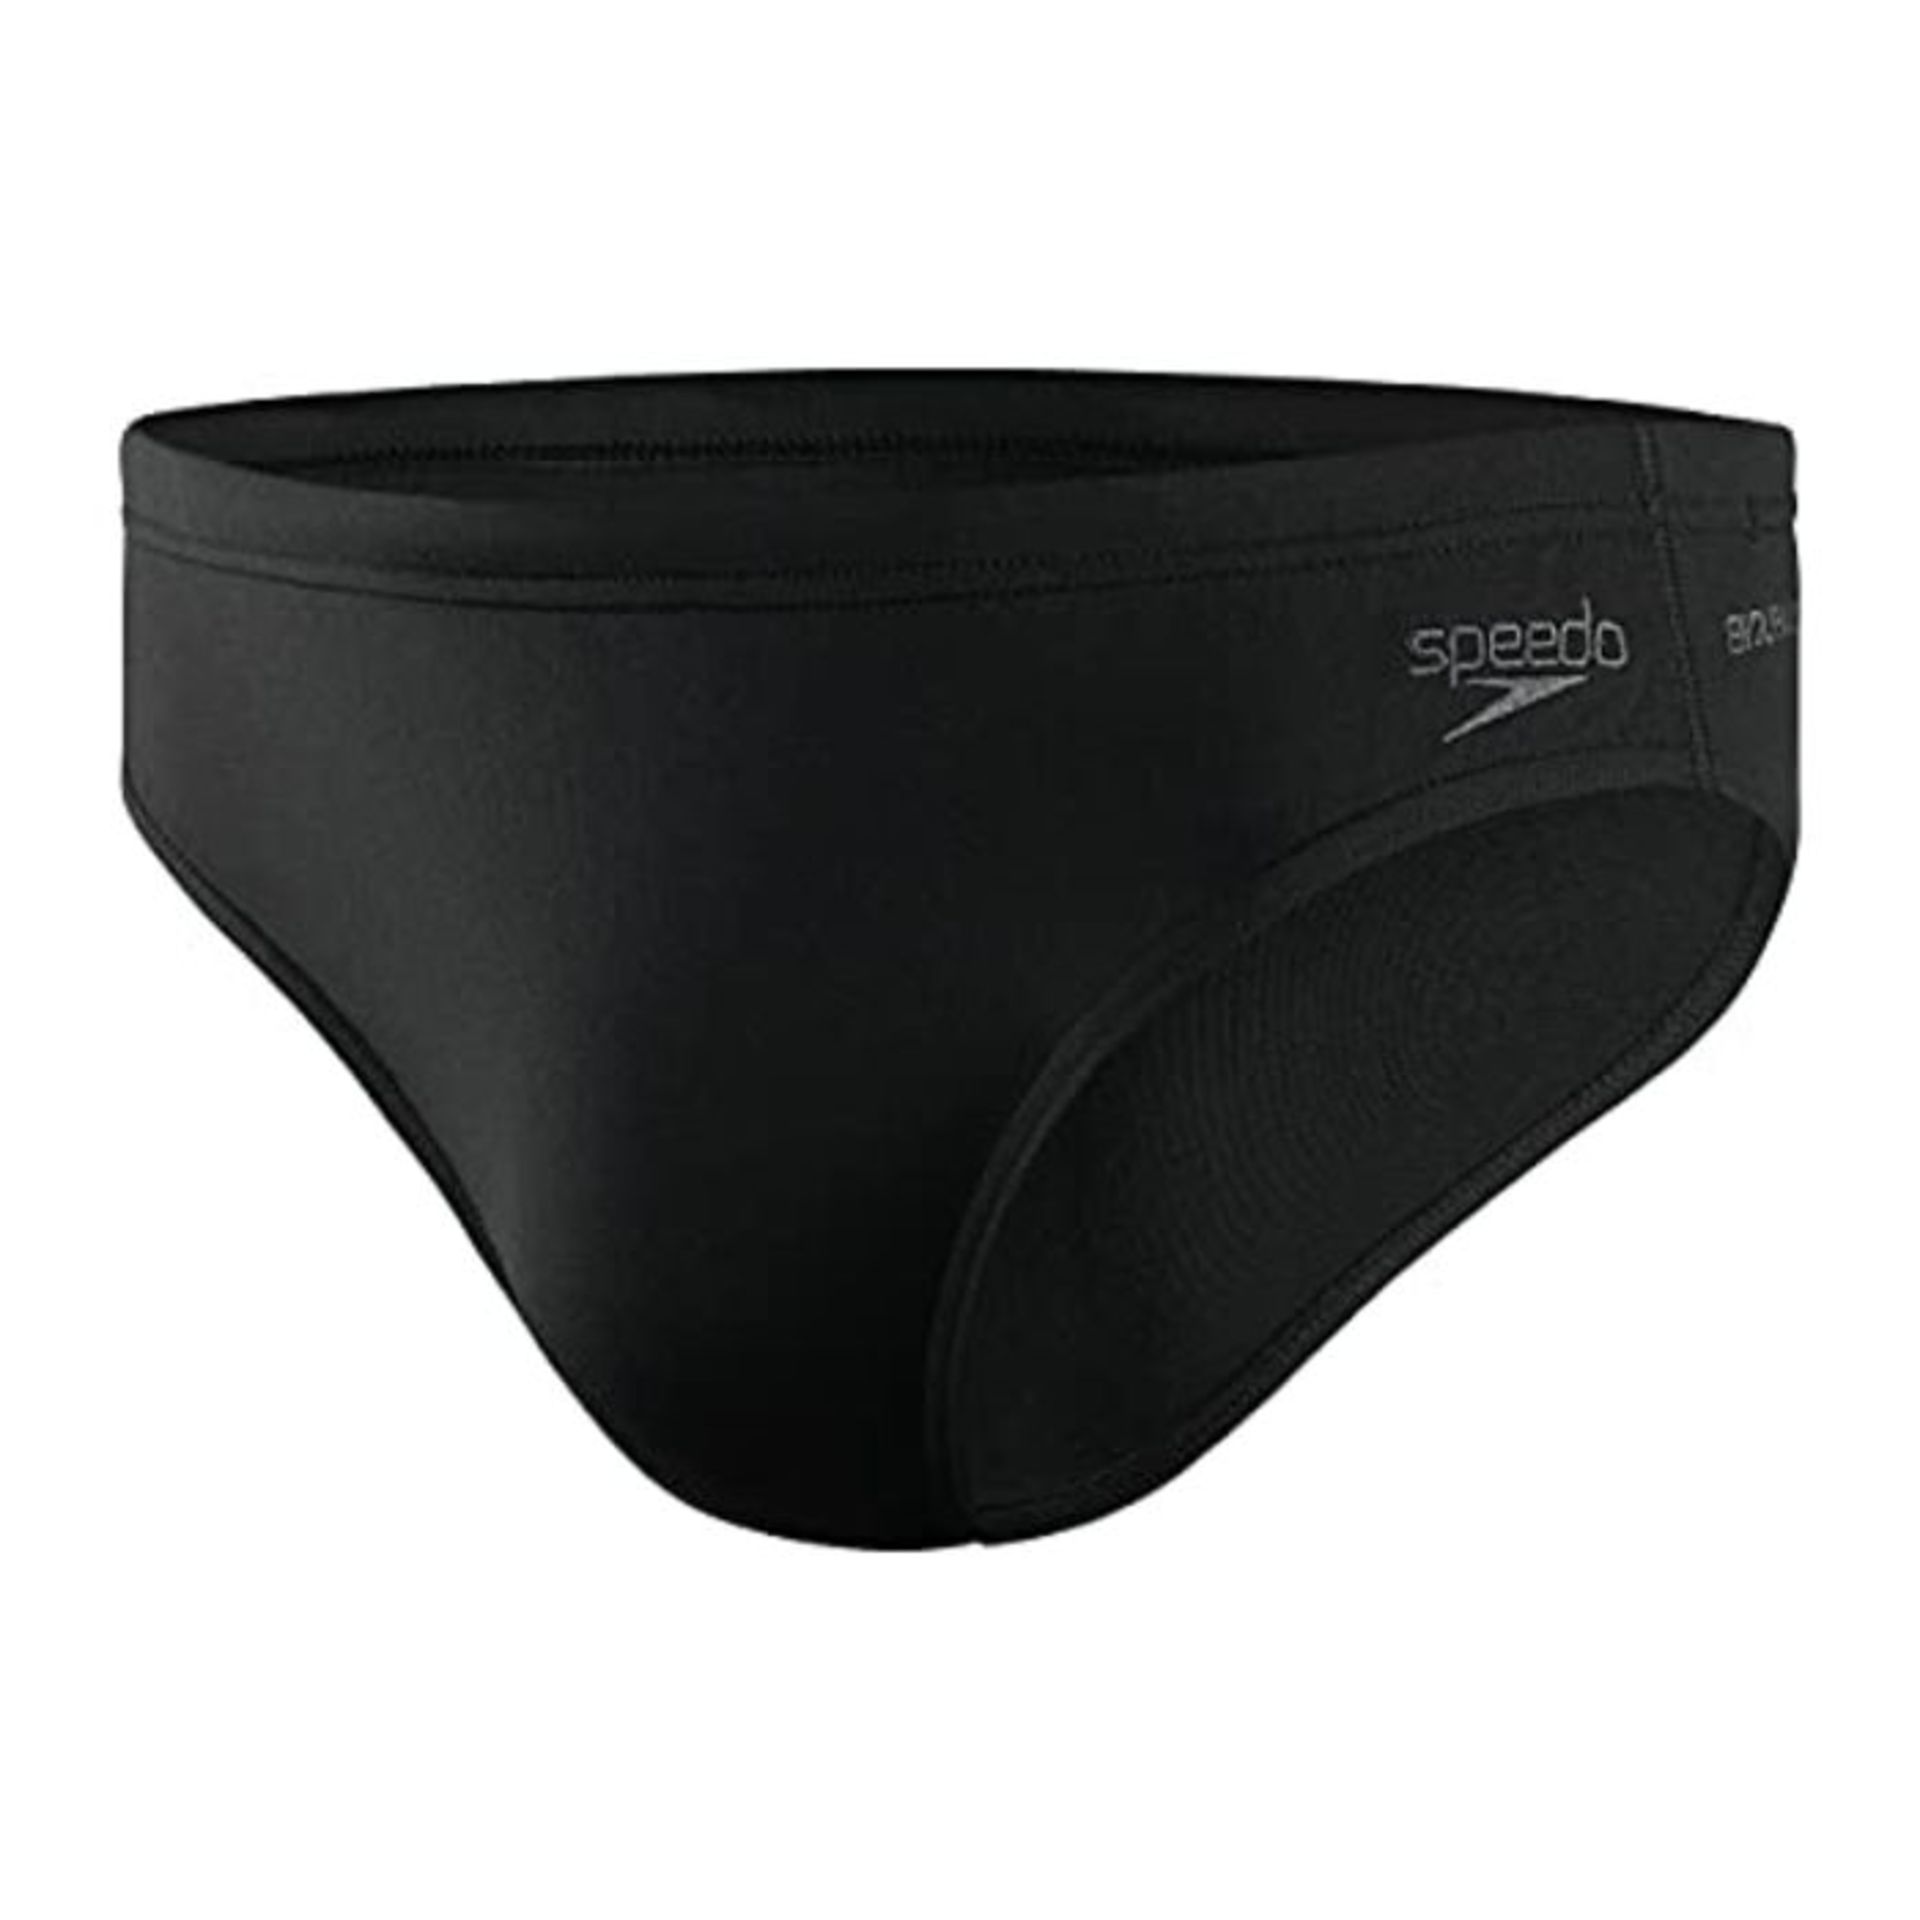 Speedo ECO Endurance+ 7cm Swimming Briefs, Comfortable Fit, 100% Chlorine Resistant, Q